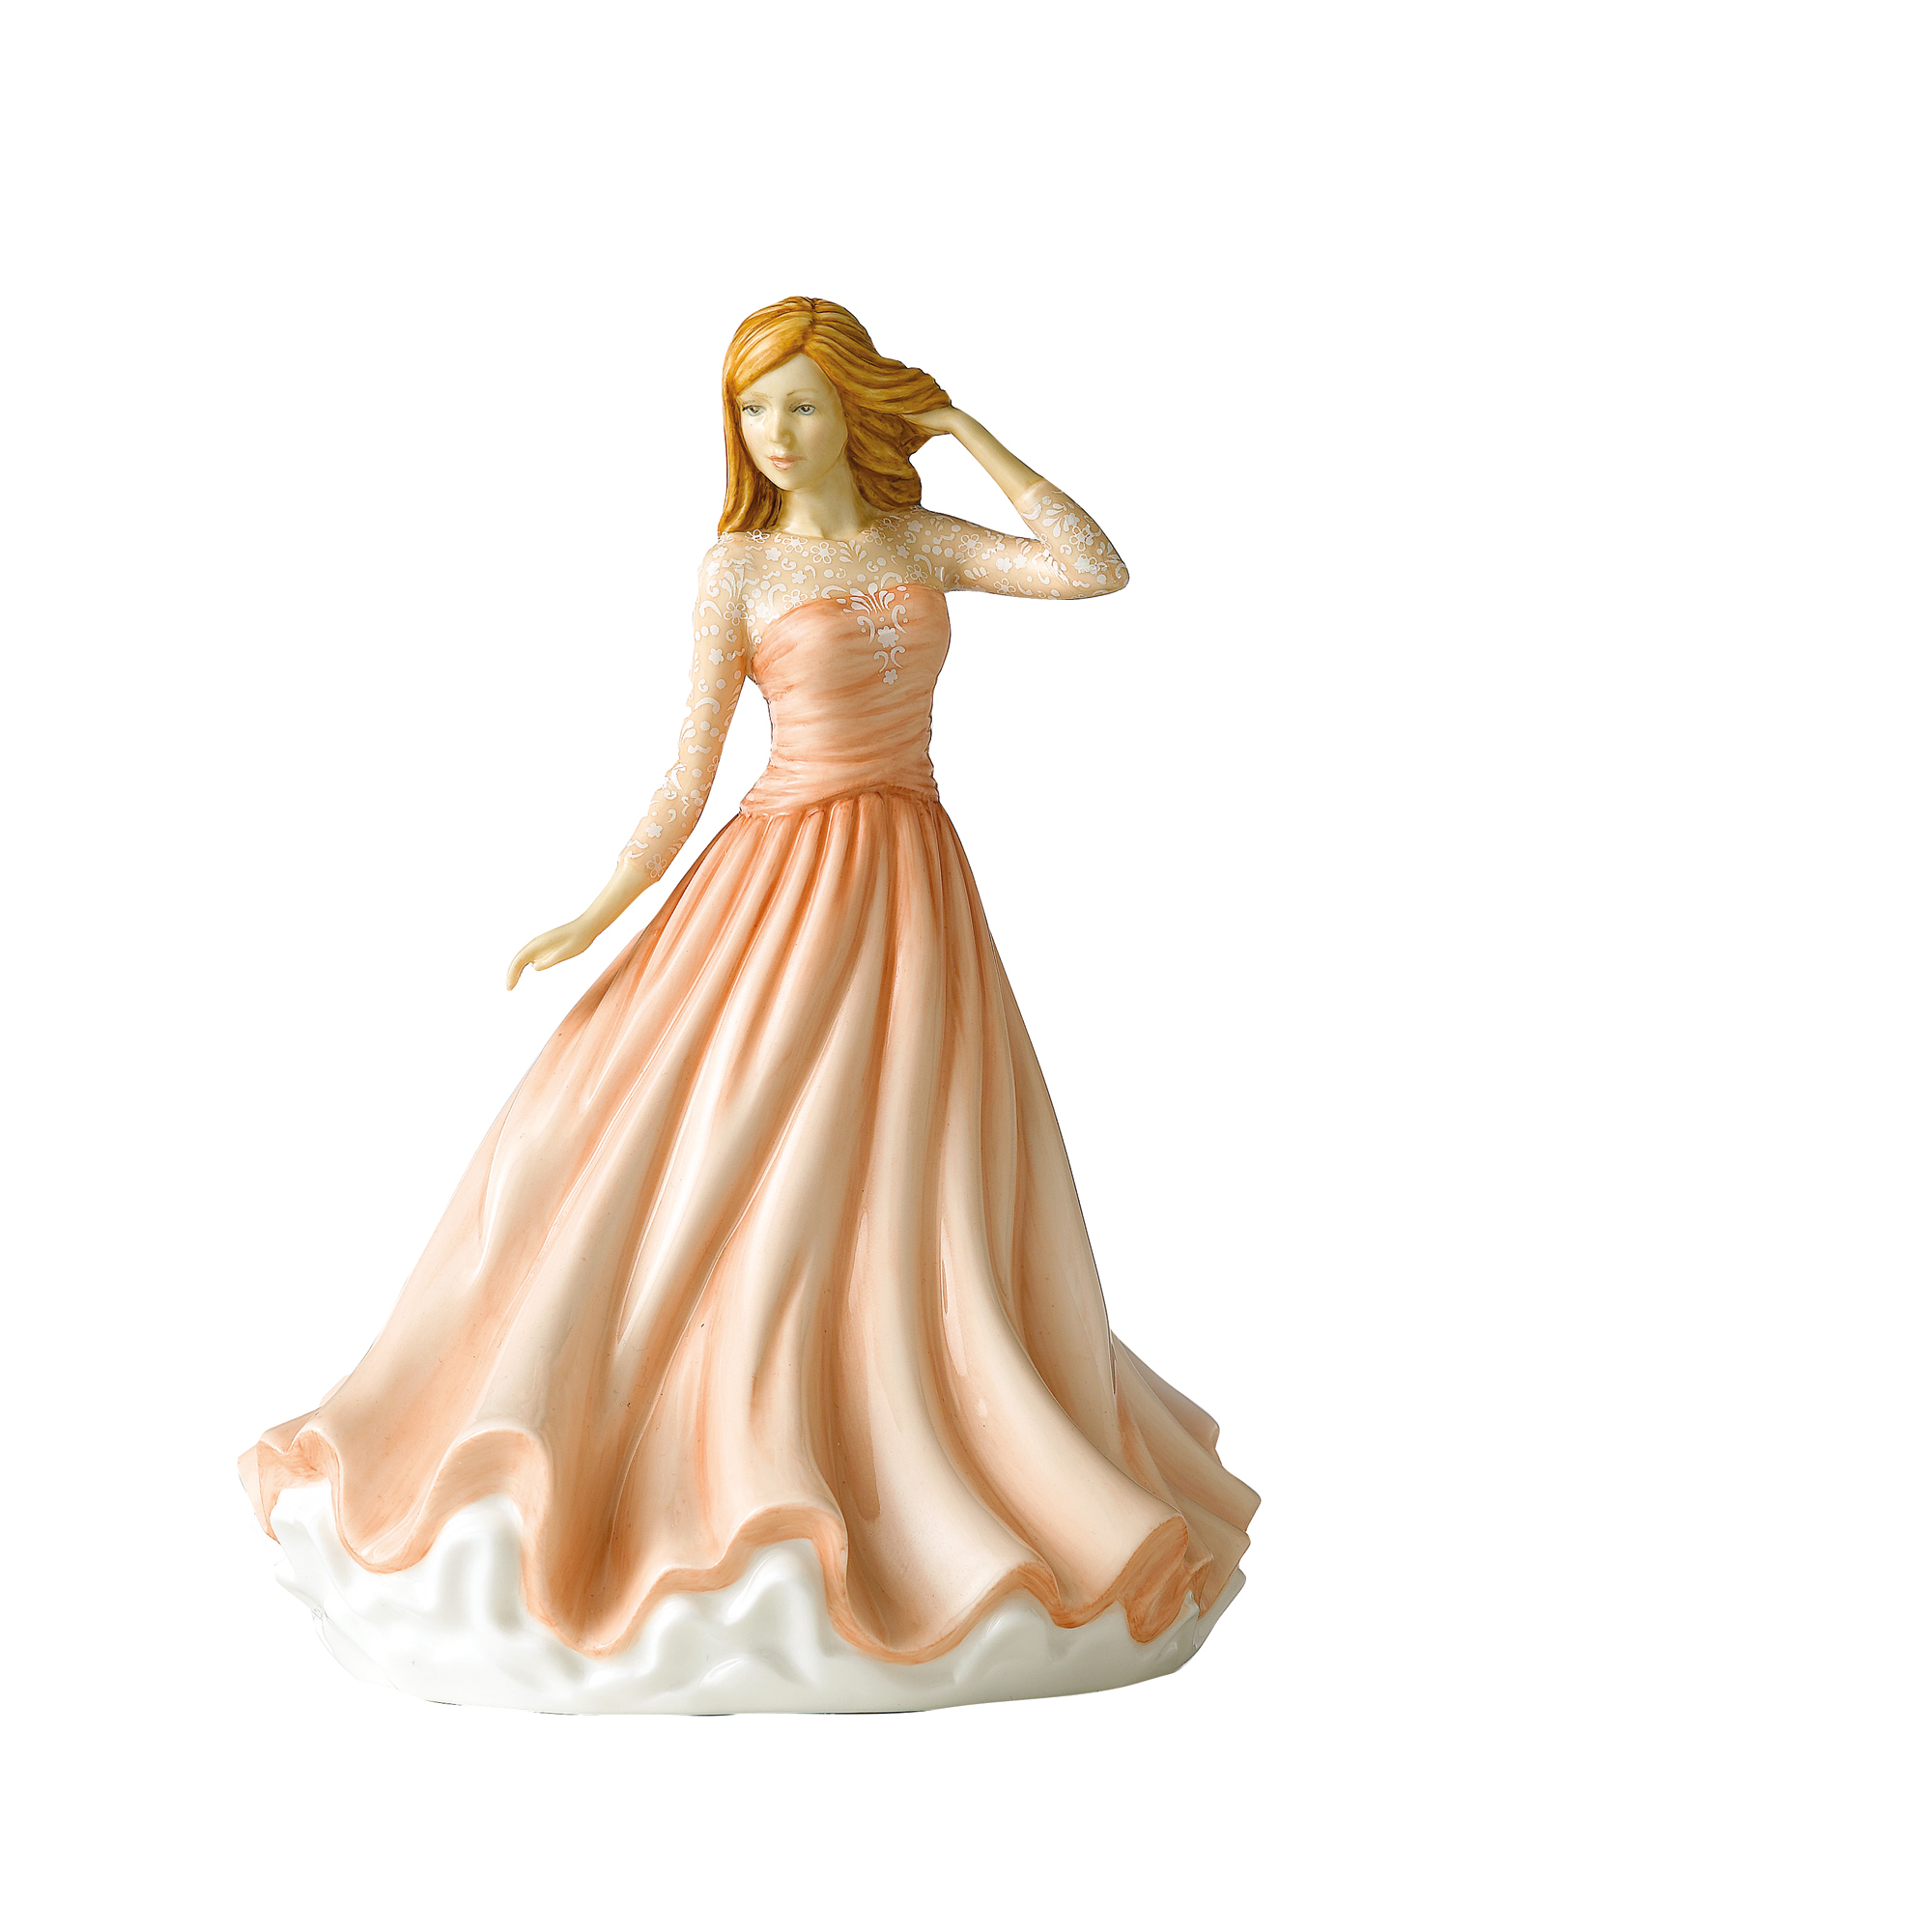 Christina HN5913 2019 Petite Figure of the Year Royal Doulton Figurine